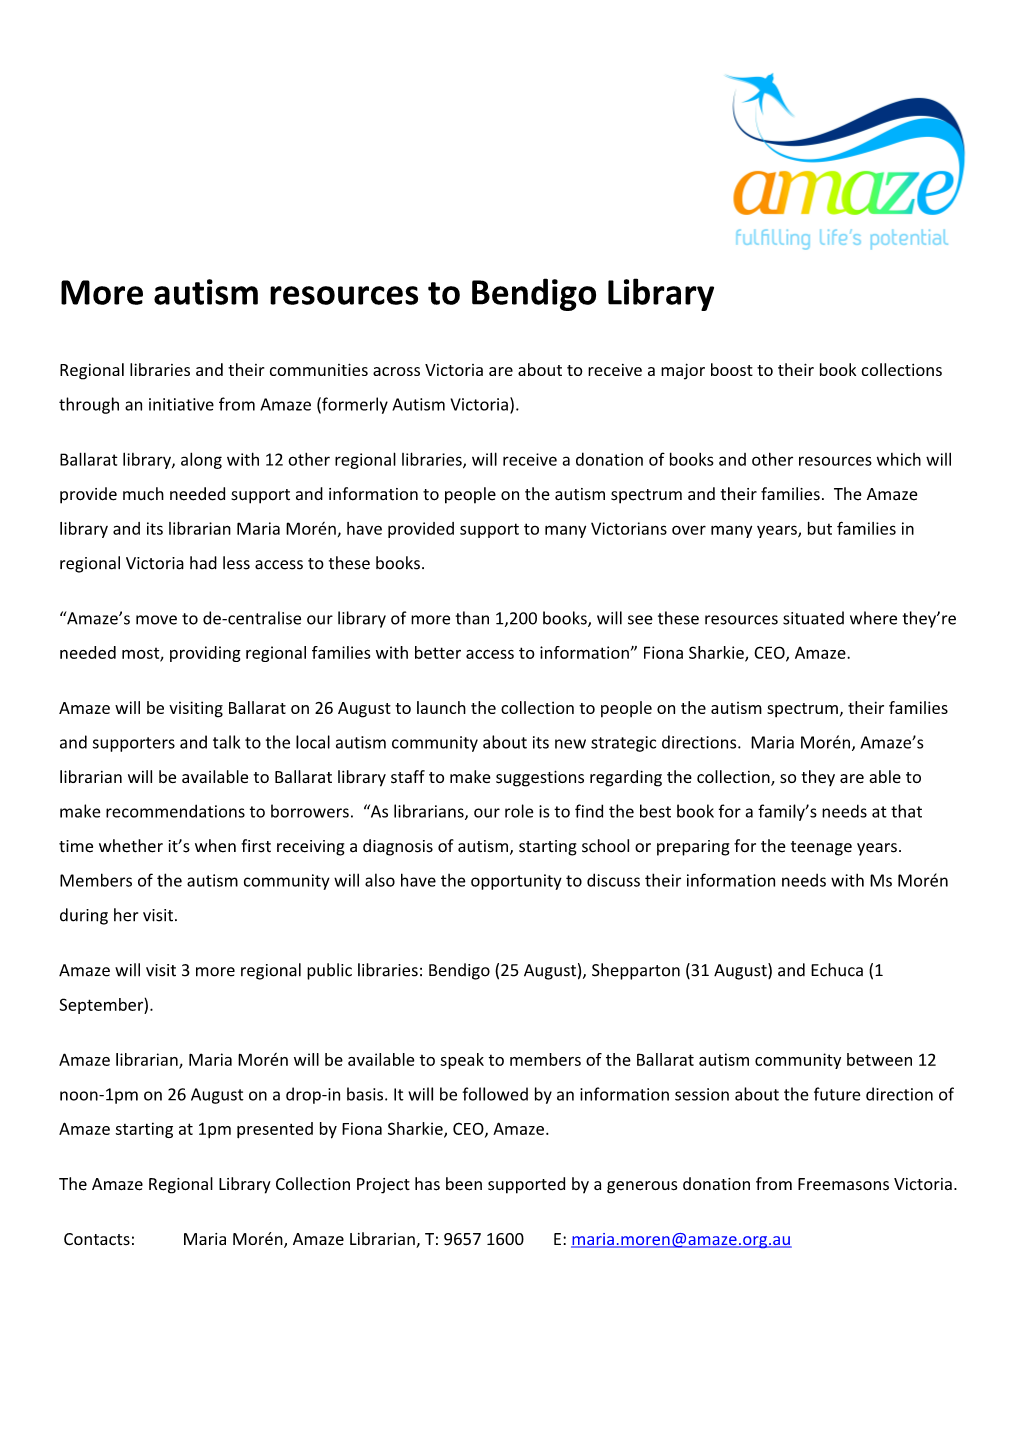 More Autism Resources to Bendigo Library